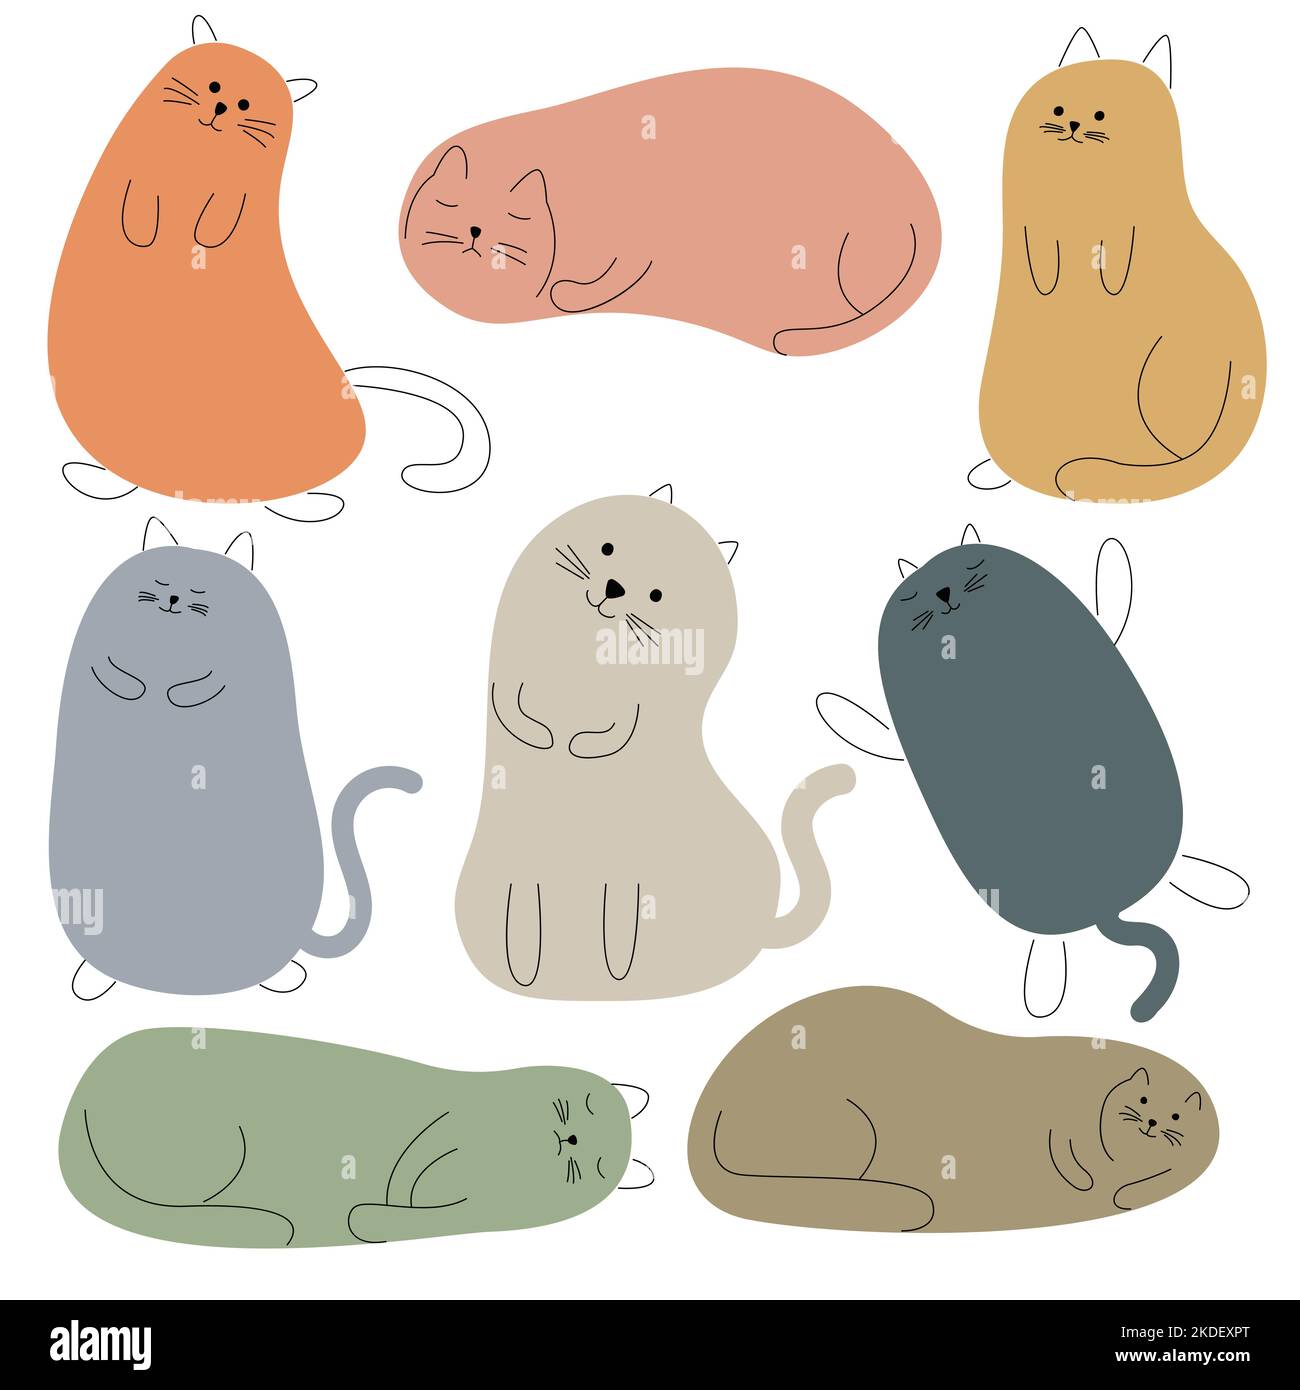 Hand drawn set of cute emotional cartoon cats. Stock Vector